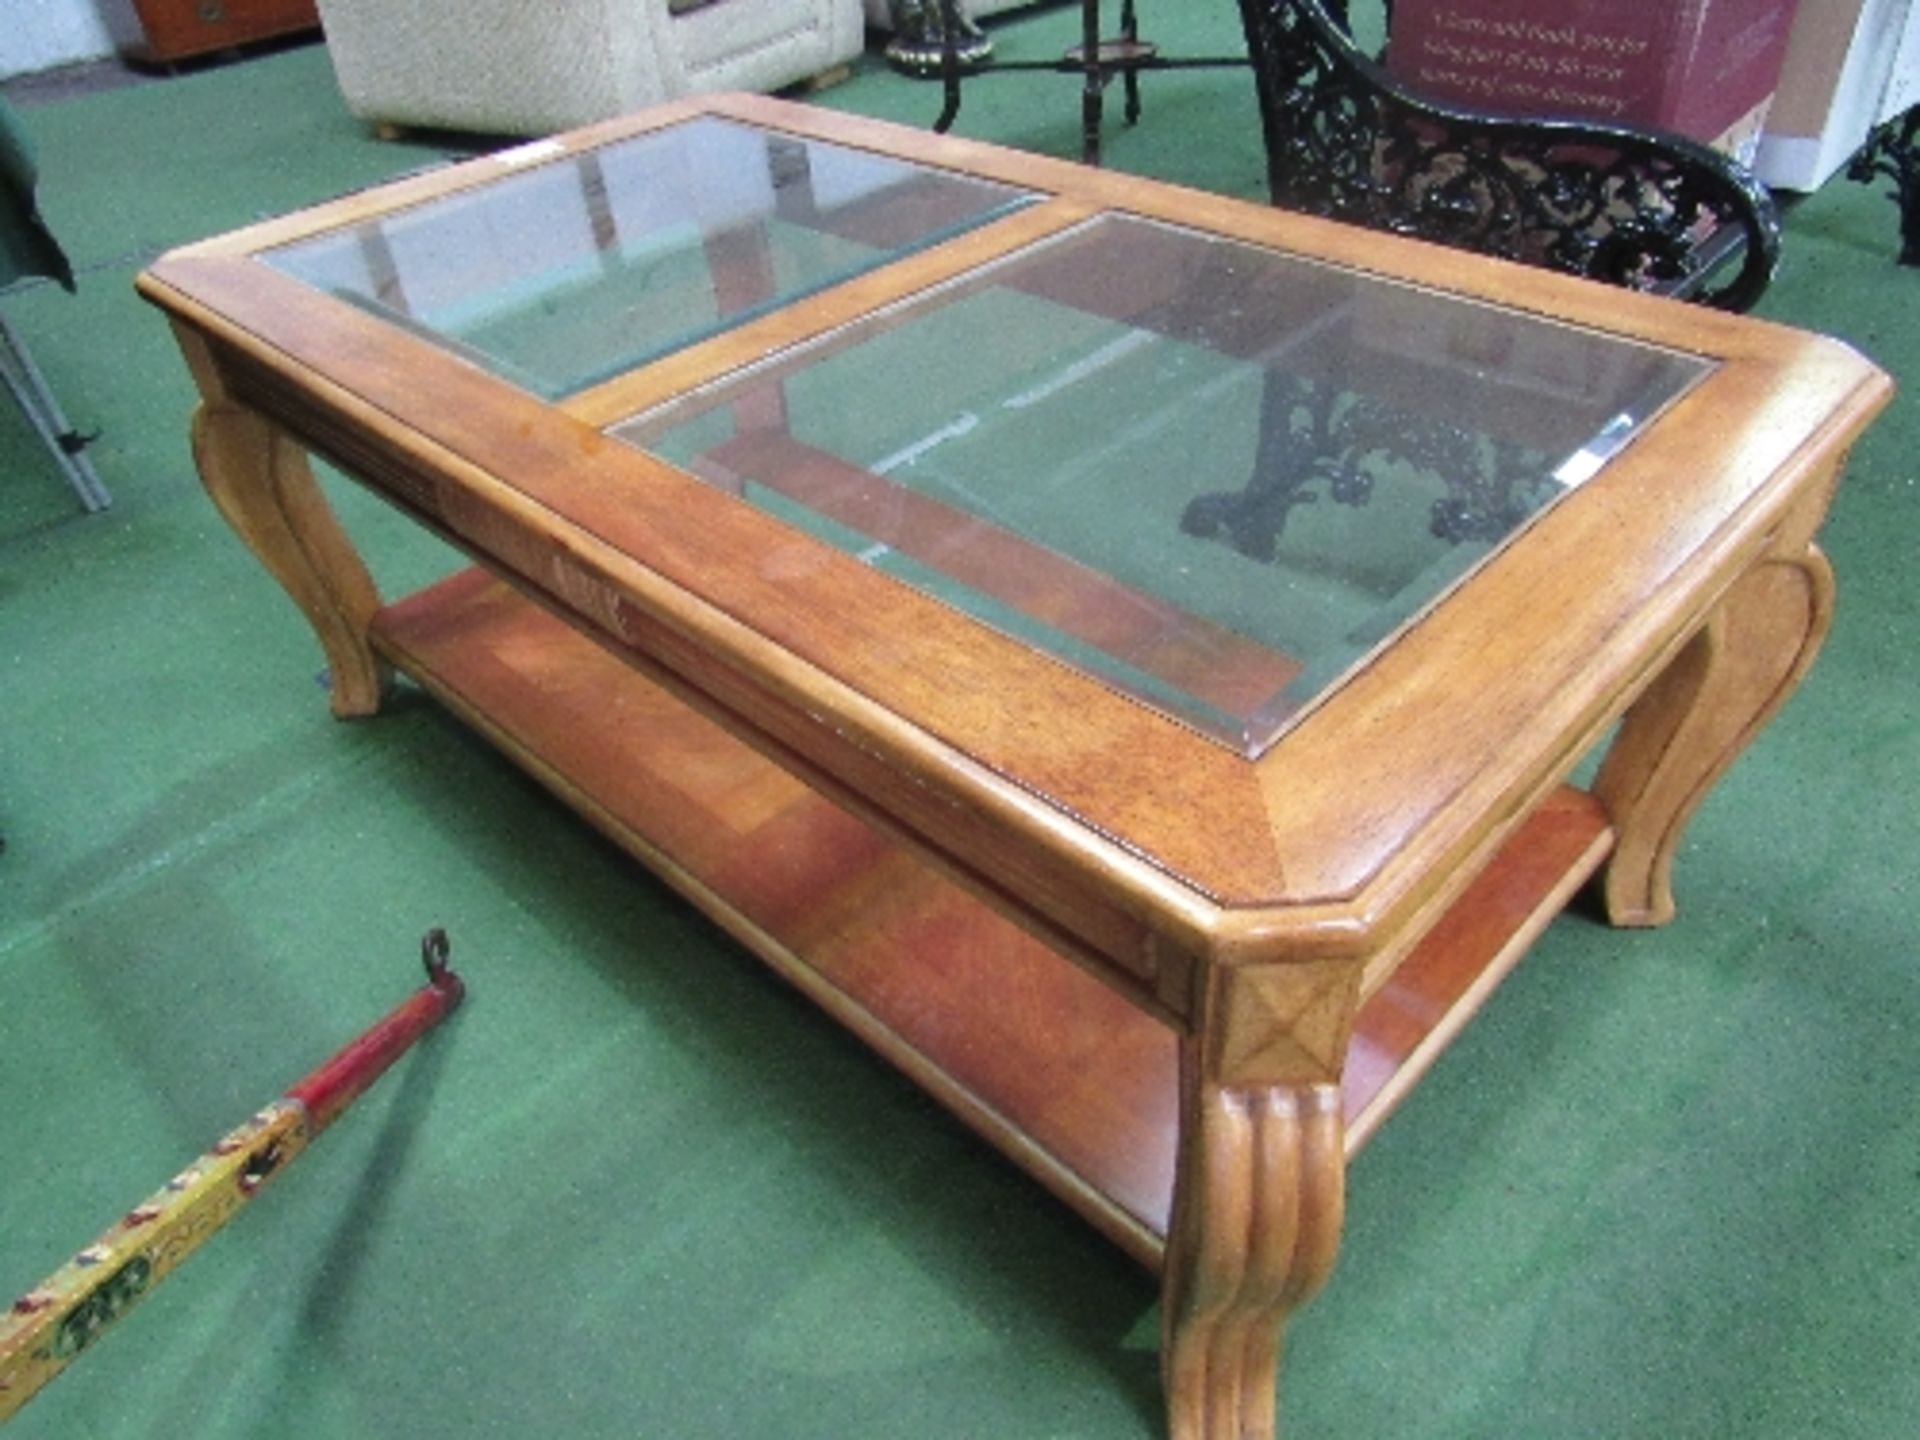 Twin glass panel coffee table with shelf beneath, 205cms x 67cms x 51cms. Estimate £20-40 - Image 2 of 3